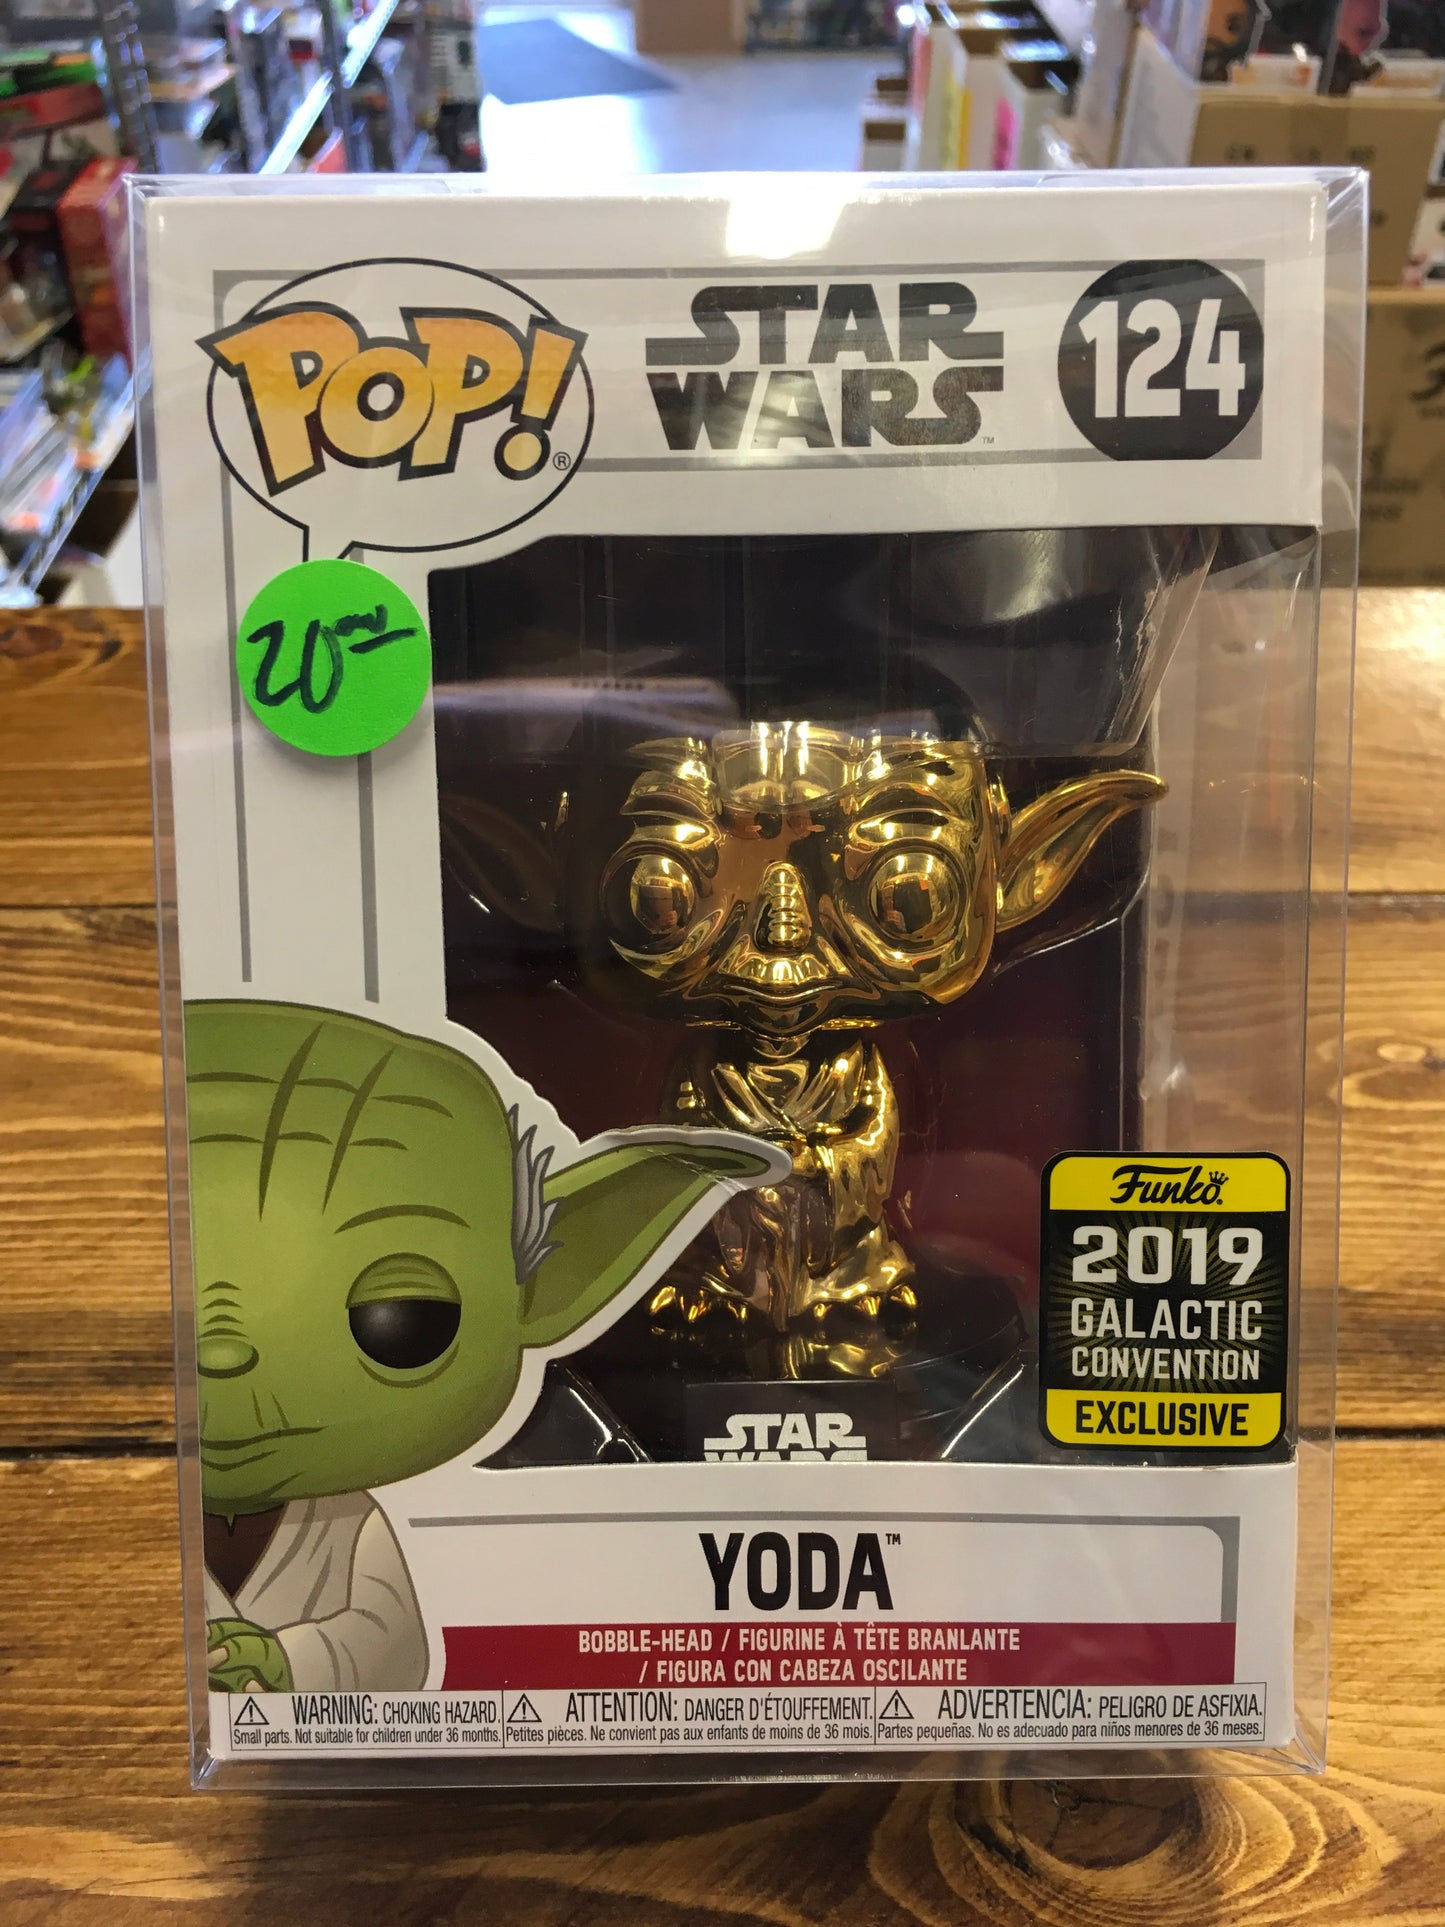 Star Wars Yoda #124 2019 Galactic Convention exclusive Funko Pop! Vinyl Bobble-Head